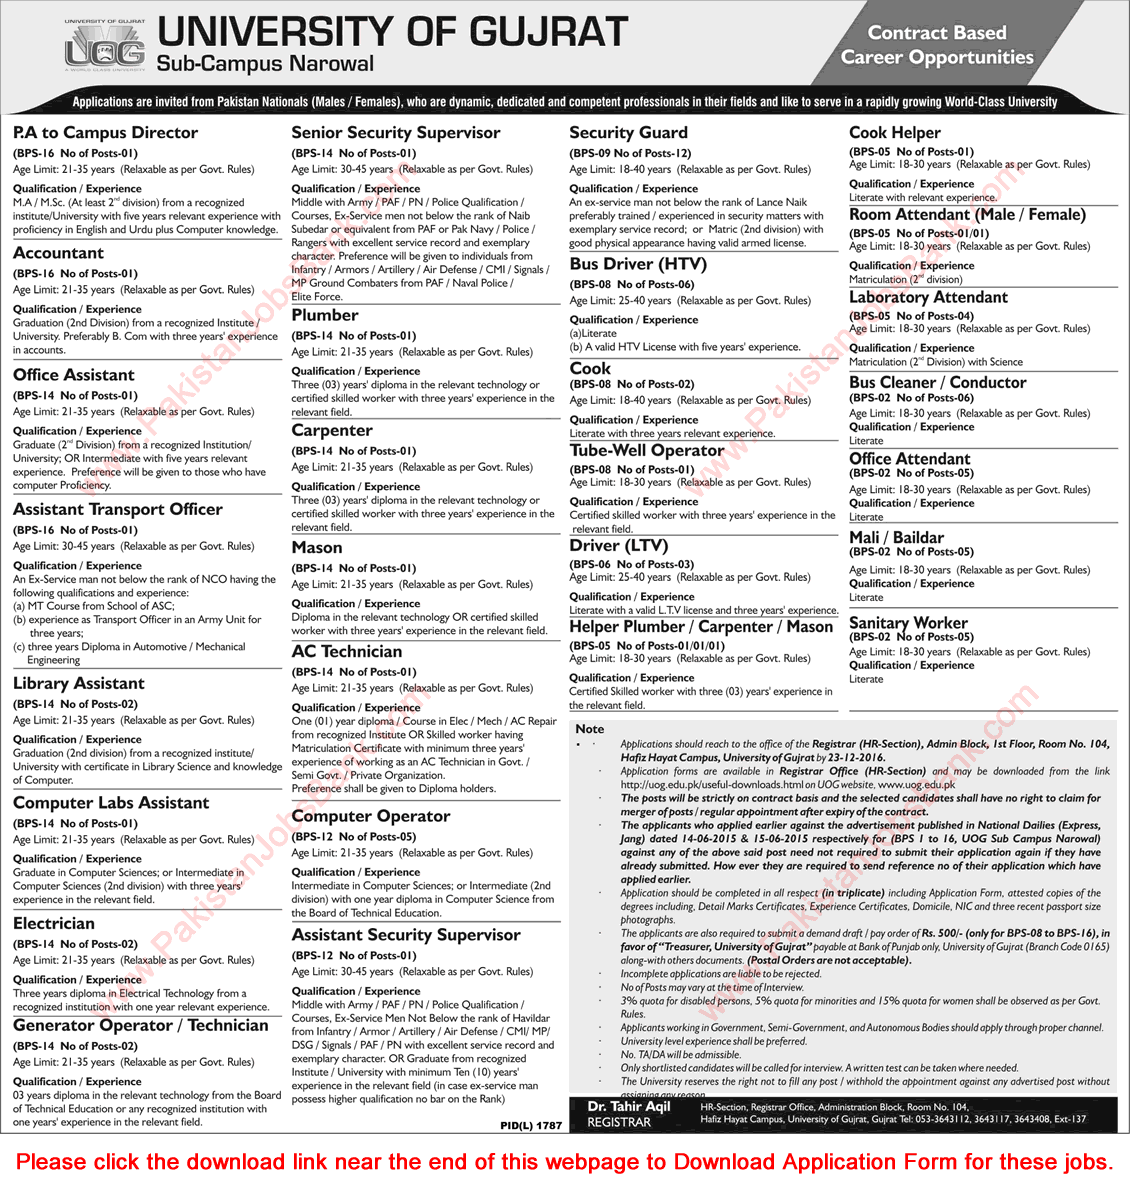 University of Gujrat Narowal Campus Jobs December 2016 Application Form Download UOG Latest